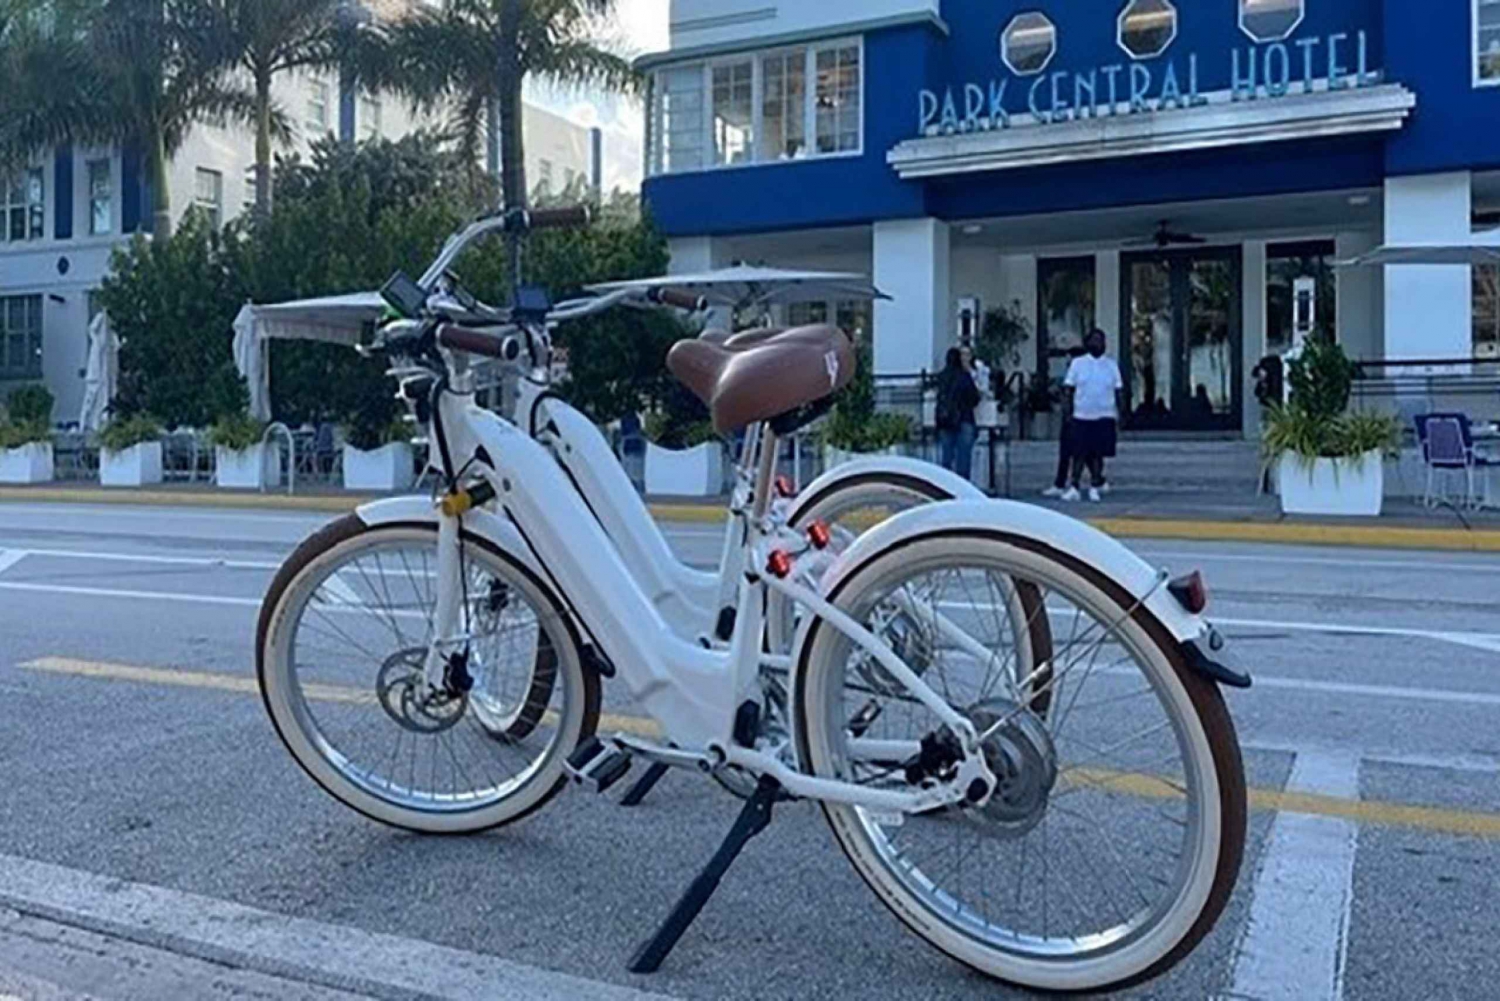 Miami: Electric Bike Rental